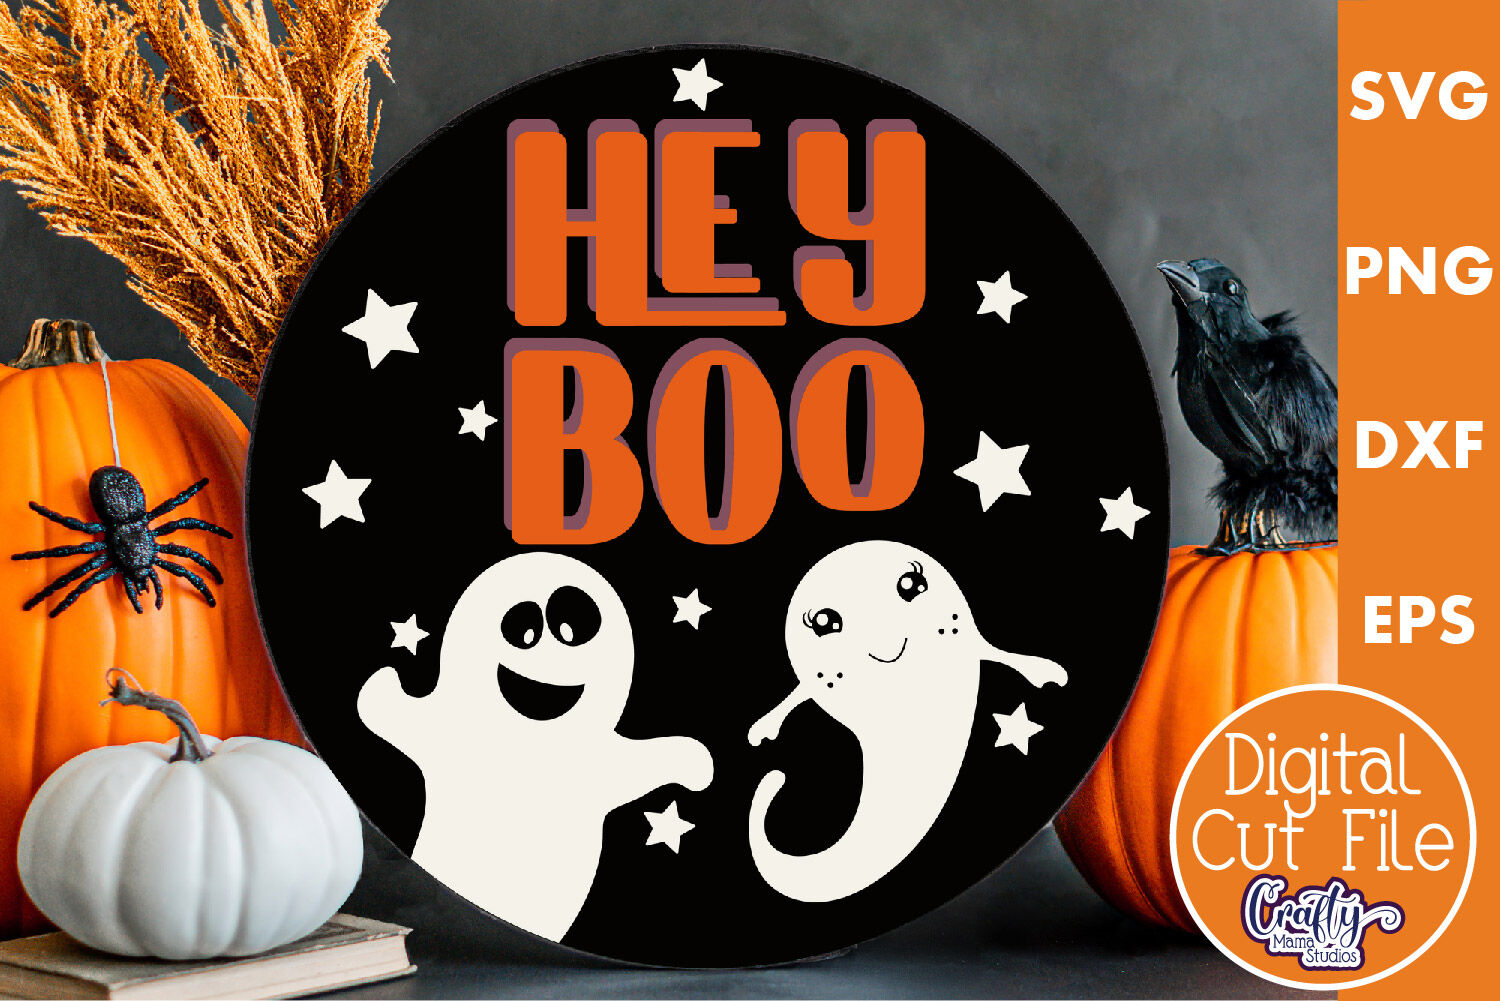 Retro Just Boo It Halloween Swoosh SVG Cutting Digital File